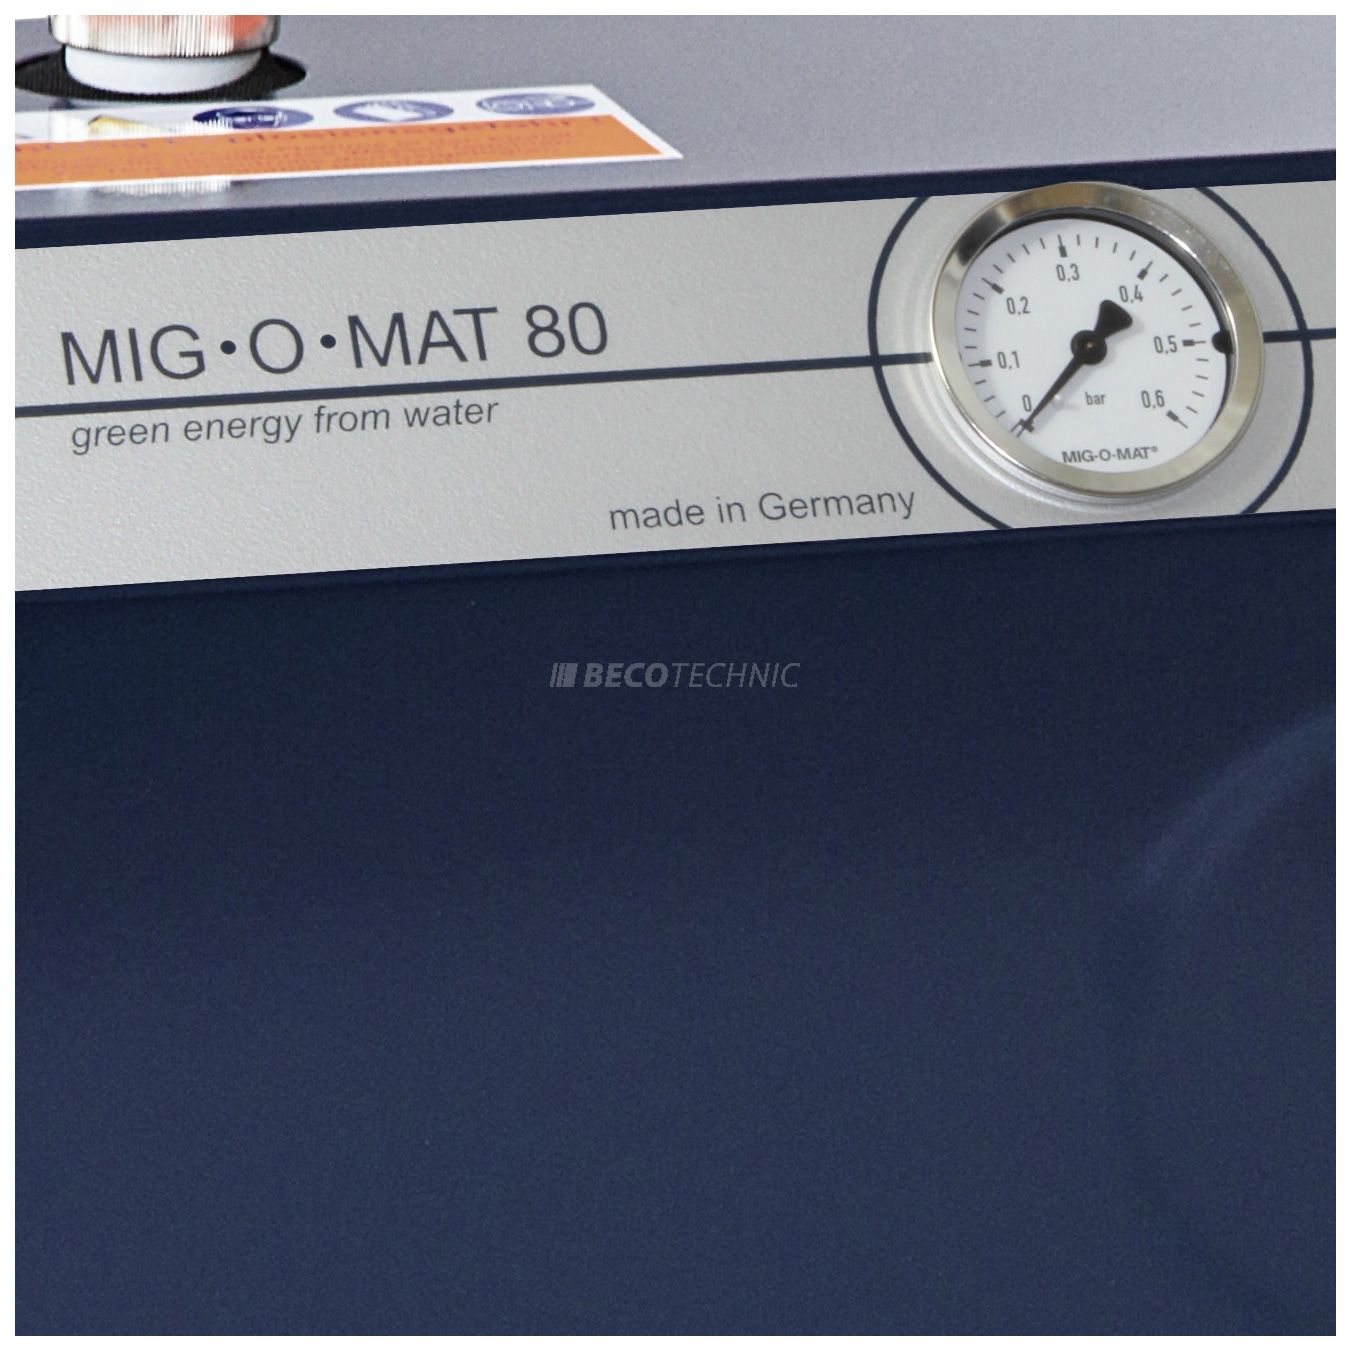 Mig-O-Mat Lötstar 80, gassoldeerunit met 80l/h gasproductie